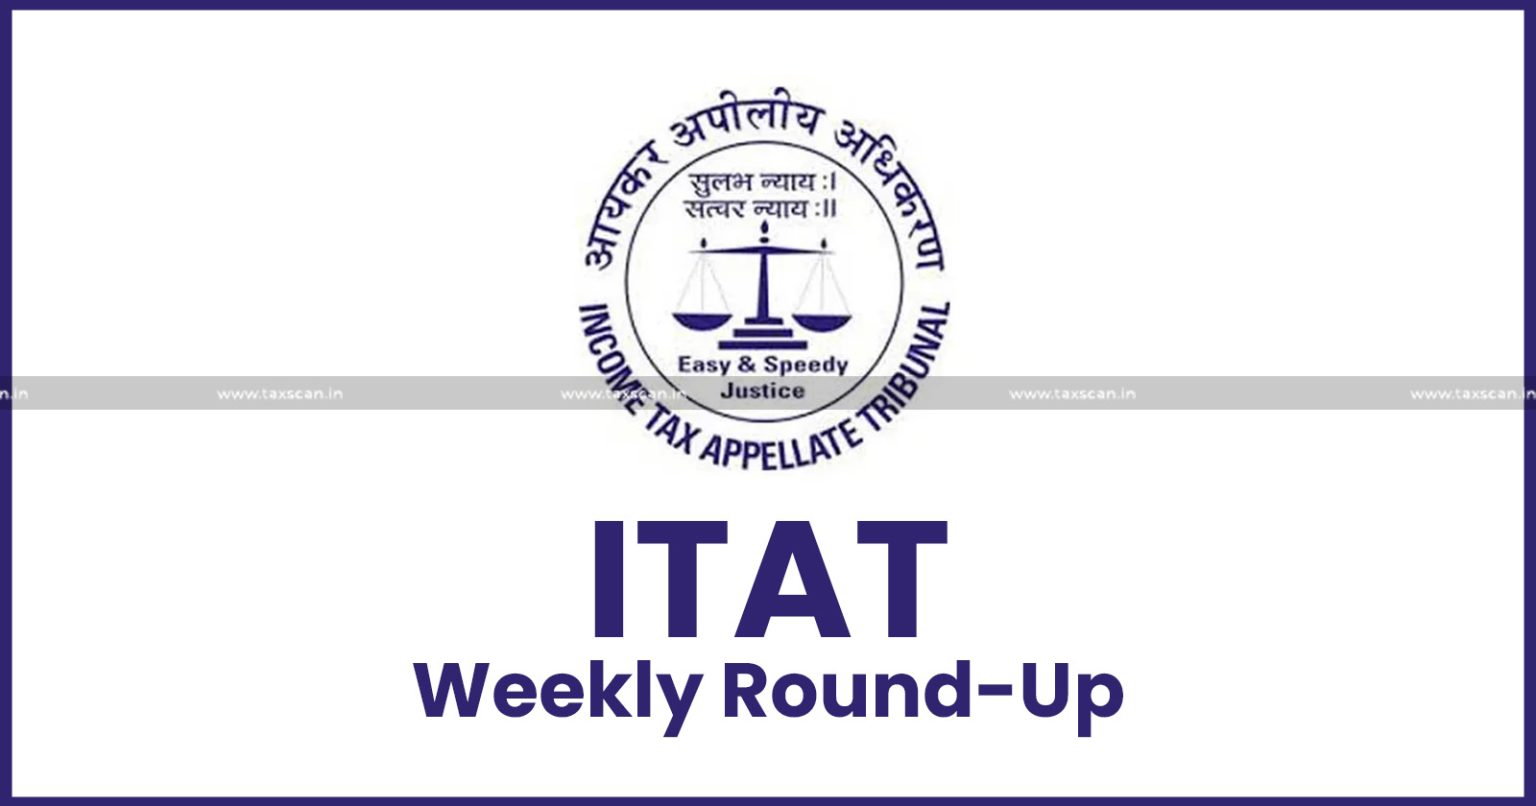 ITAT Weekly round up - ITAT Round up - Weekly round up - Income tax weekly round up - ITAT - Income tax - ITAT Weekly updates - Round up - TAXSCAN